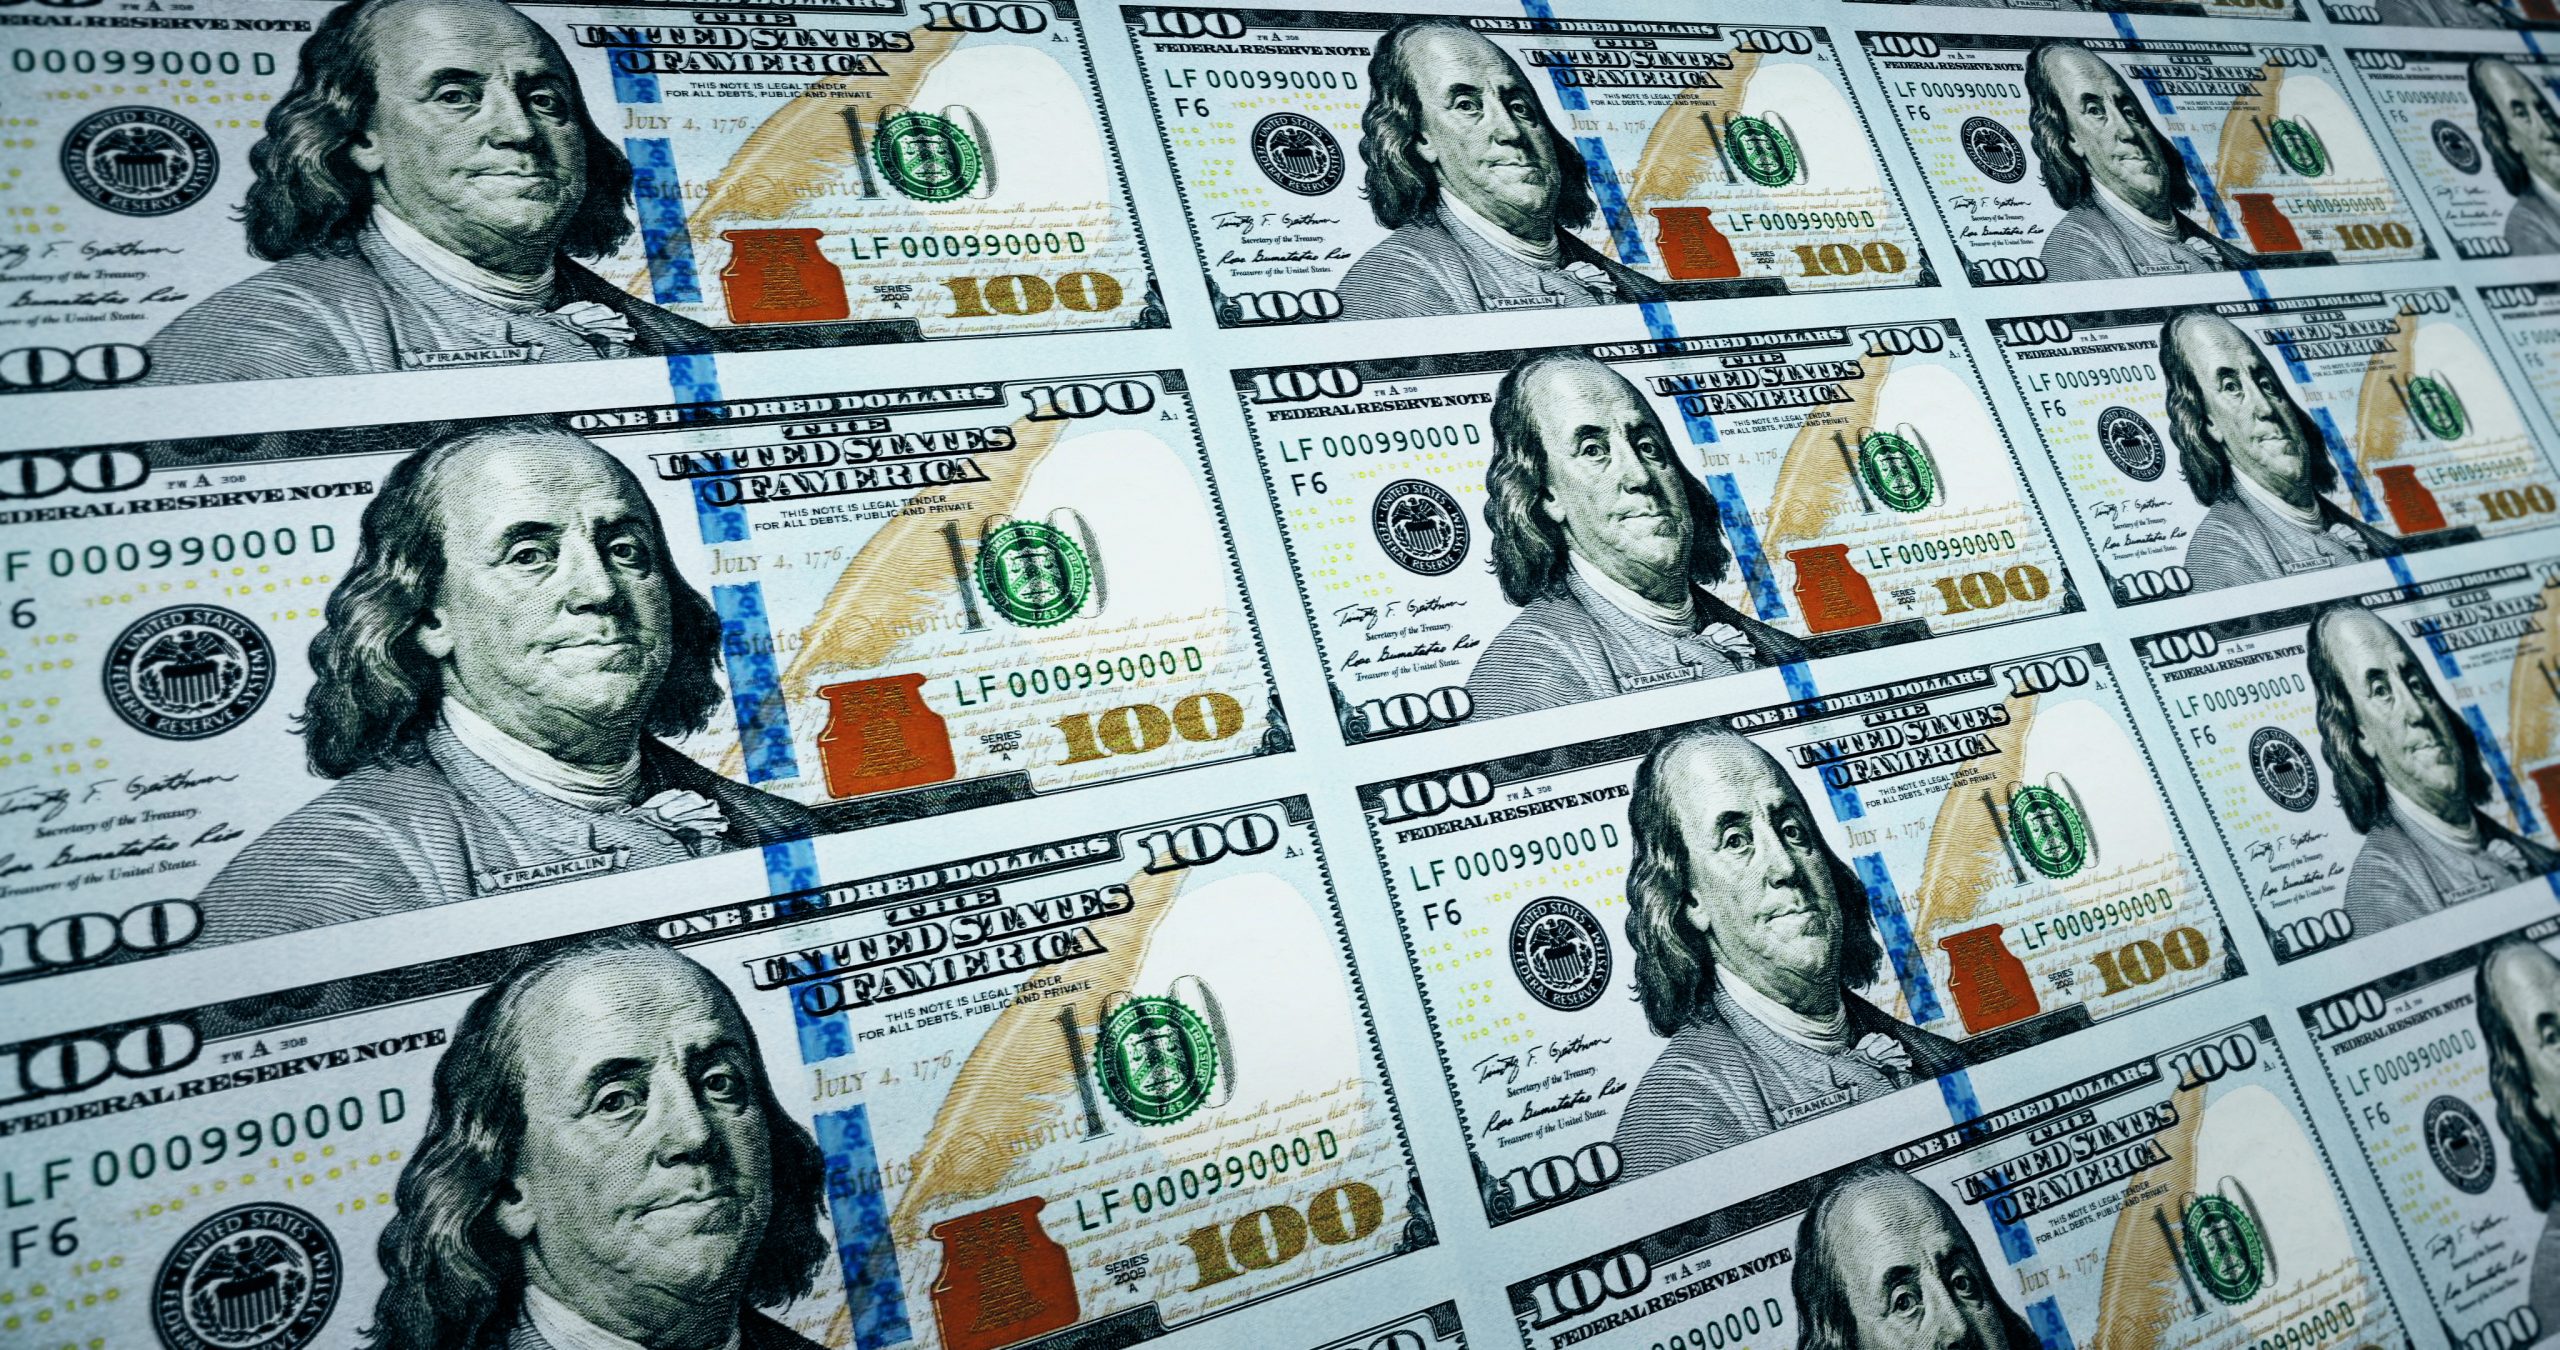 Sheets of New One Hundred Dollar Bills (Photo: iStock - akiraworks)